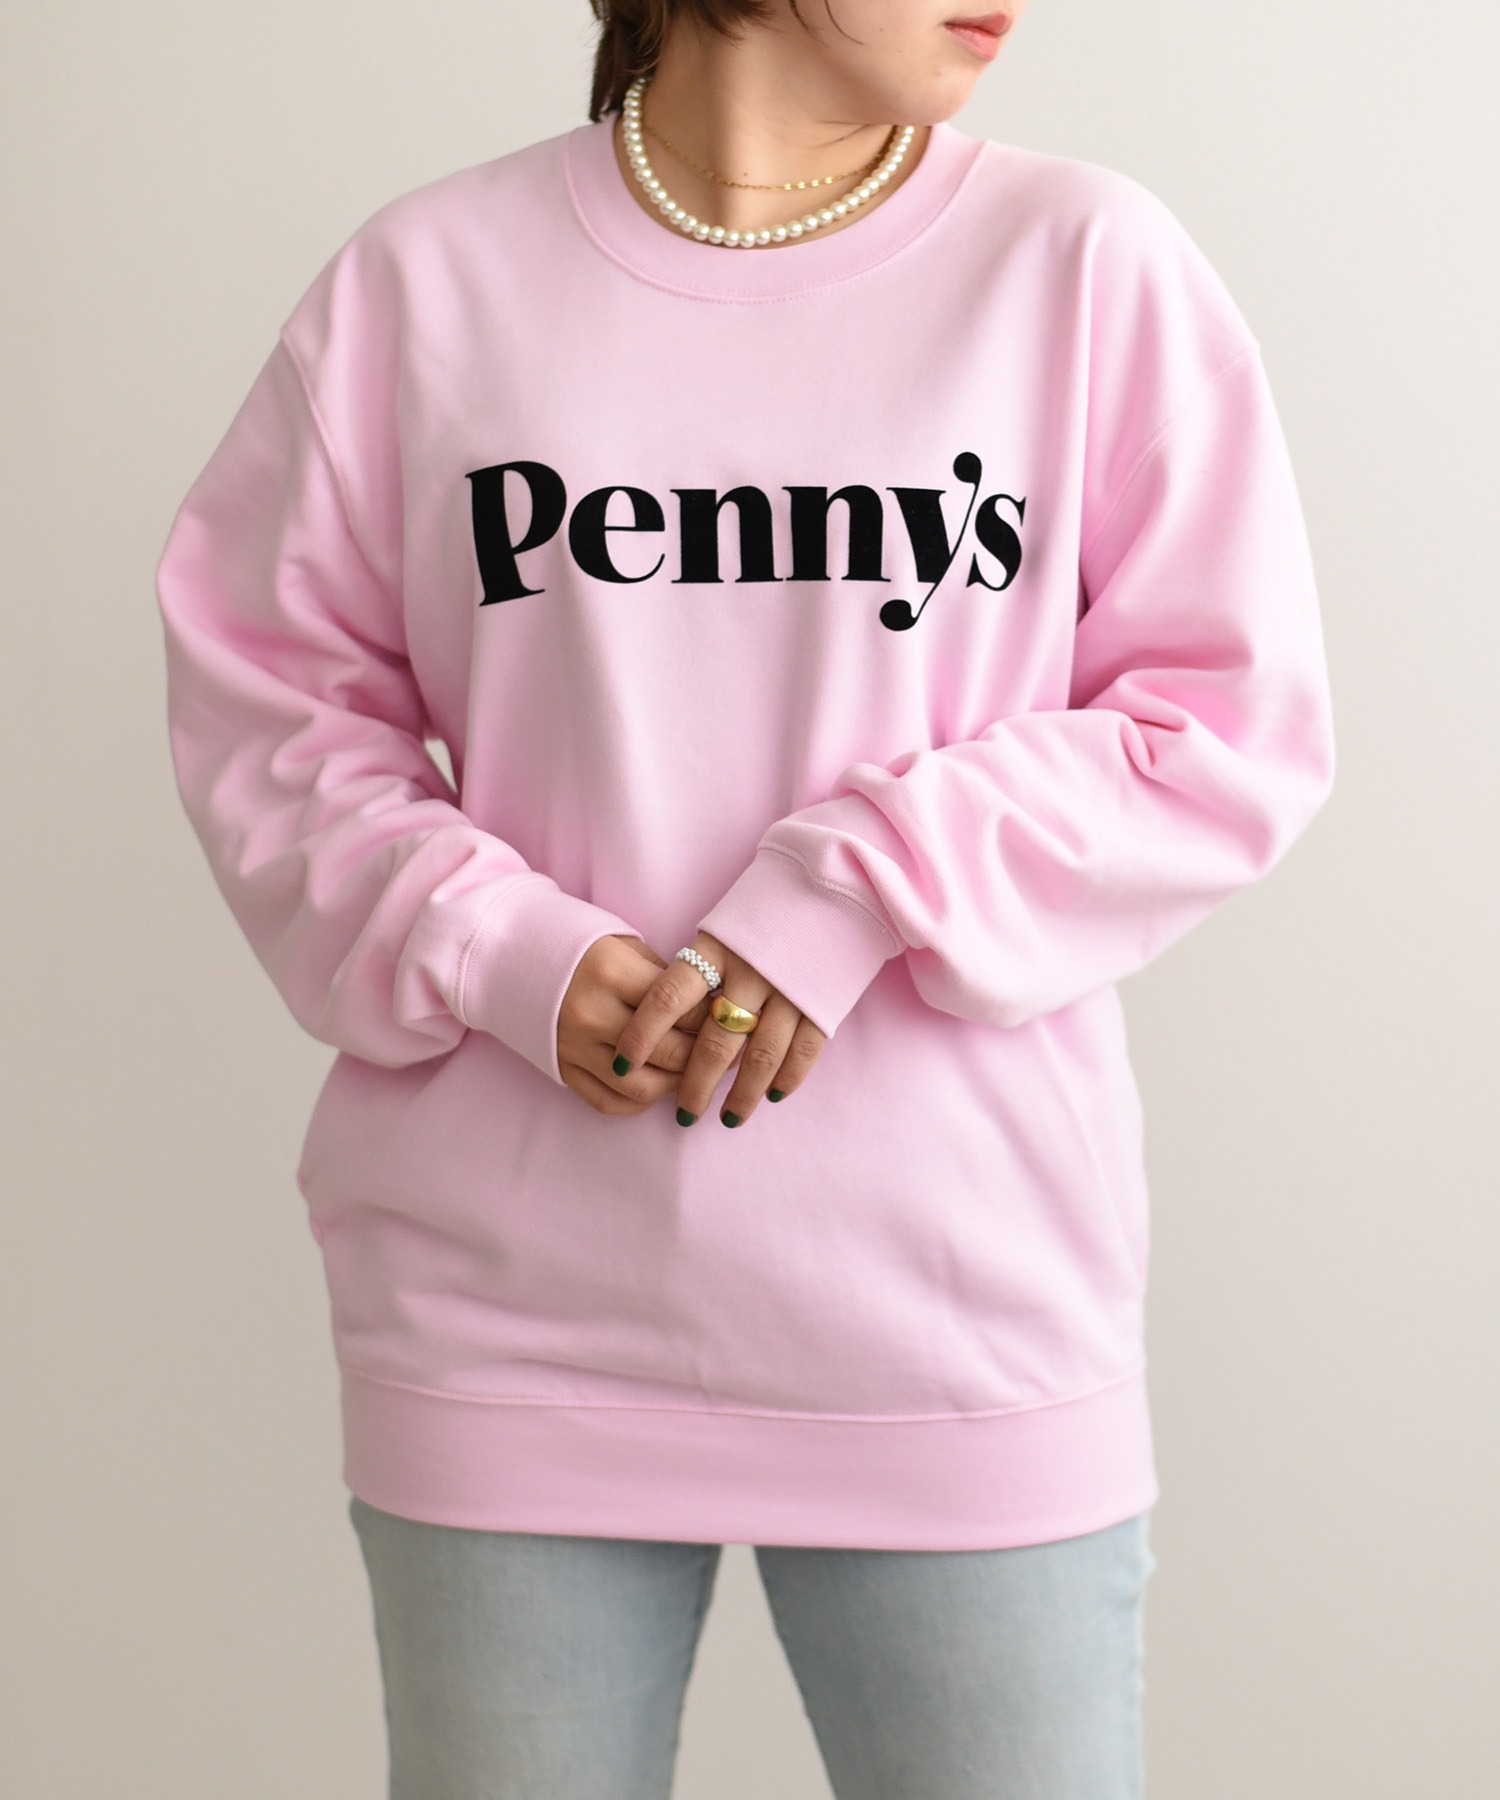 Penny’sフロッキープリントプルオーバースウェット